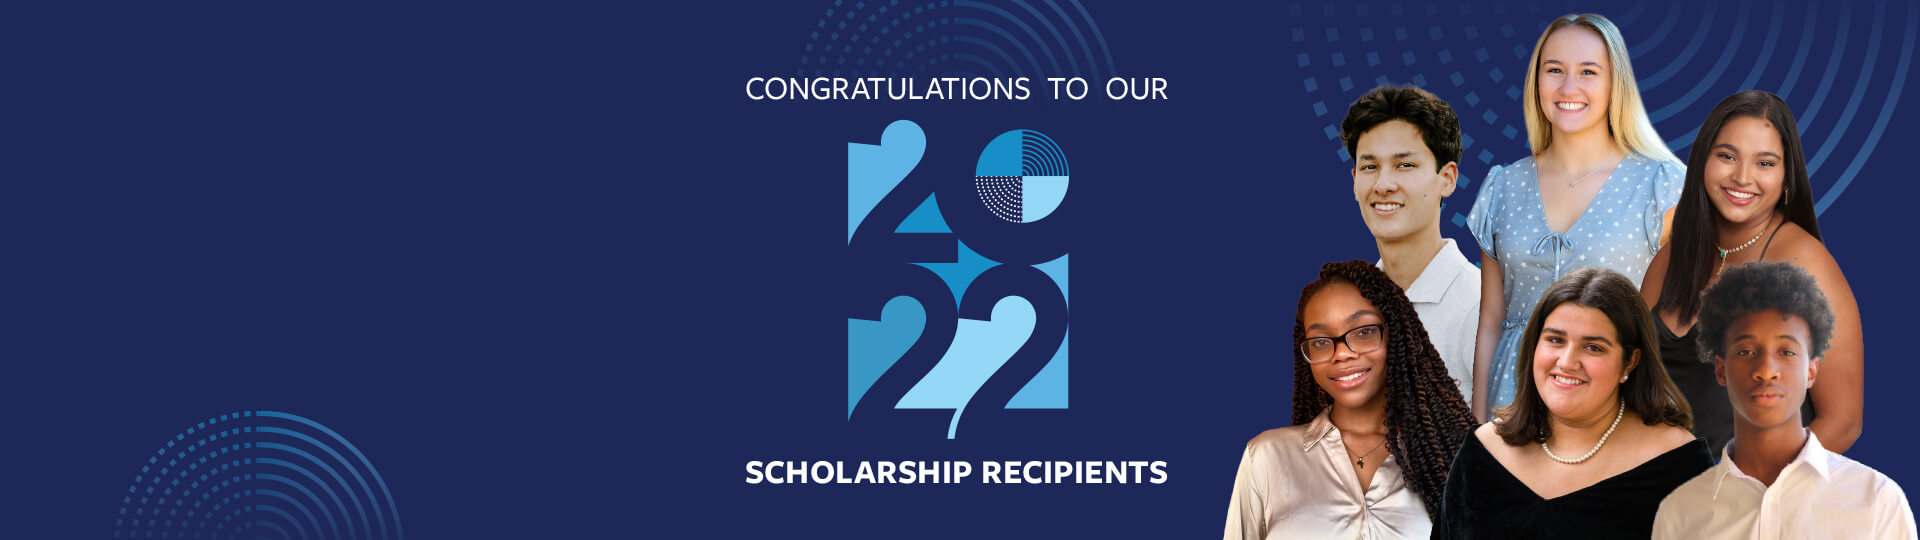 BCU 2022 scholarship winners announced